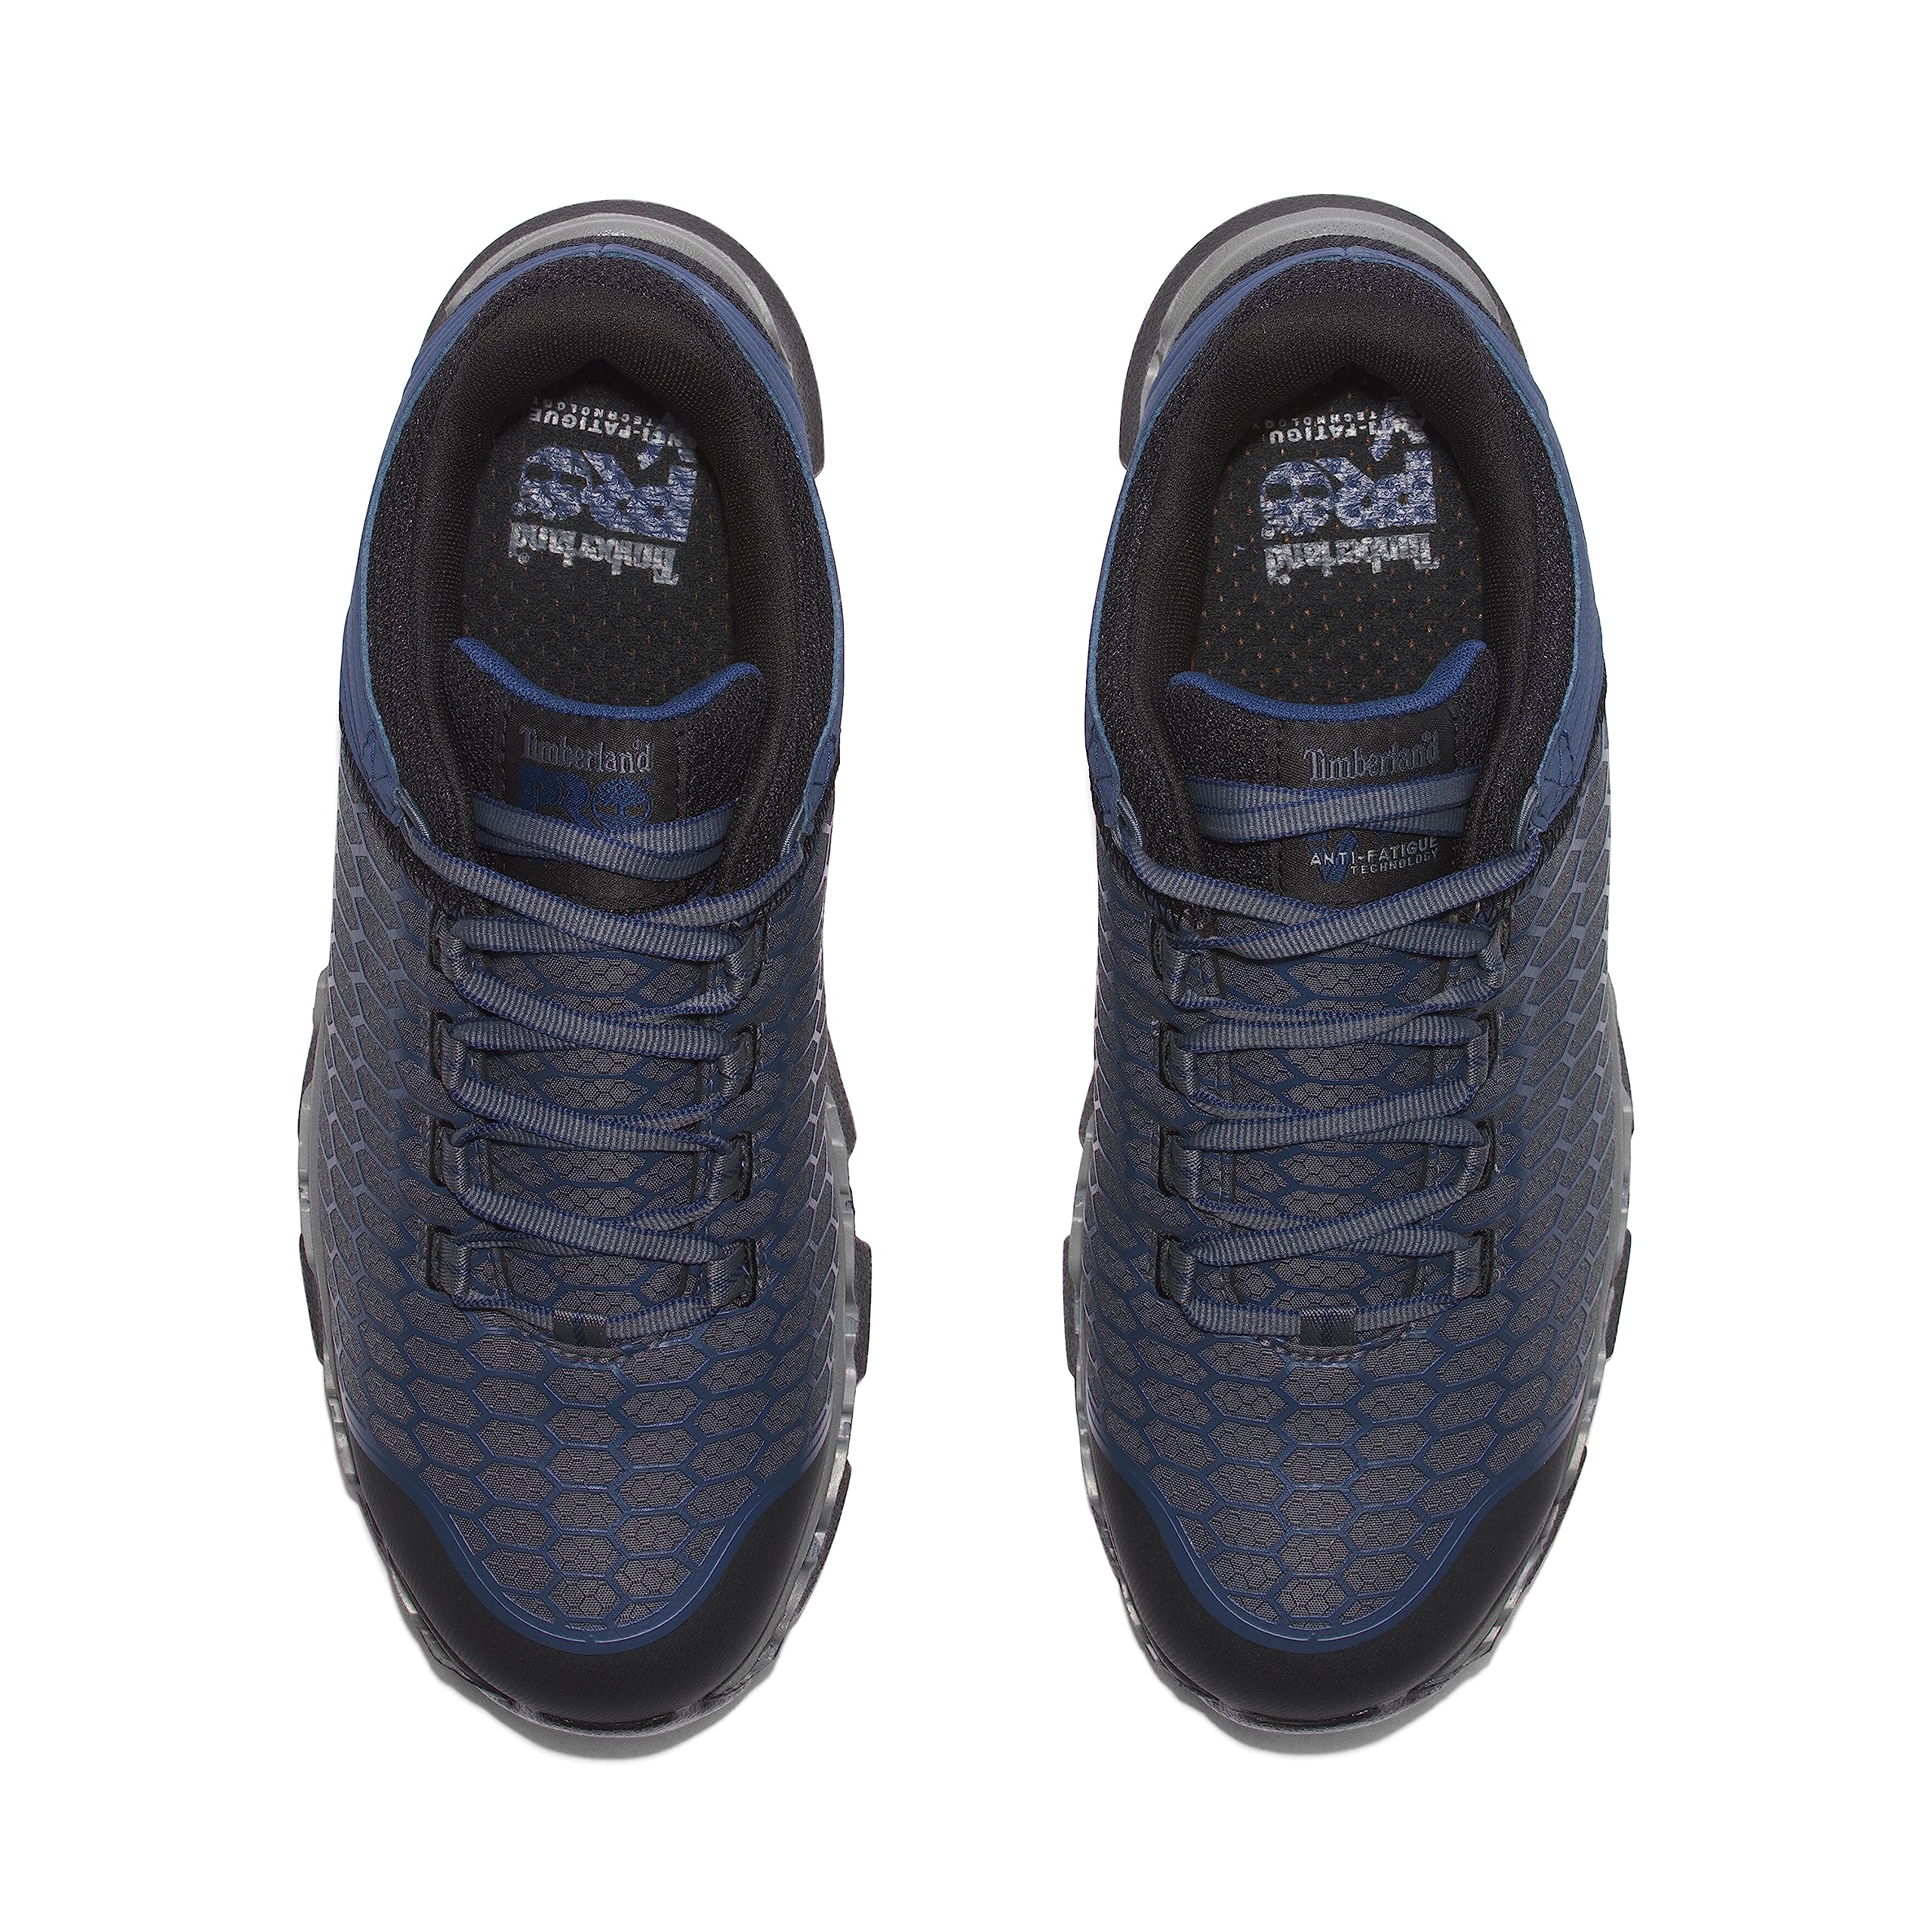 Timberland PRO Men's Powertrain Sport Alloy Toe Eh-Raptek Synthetic Industrial & Construction Shoe